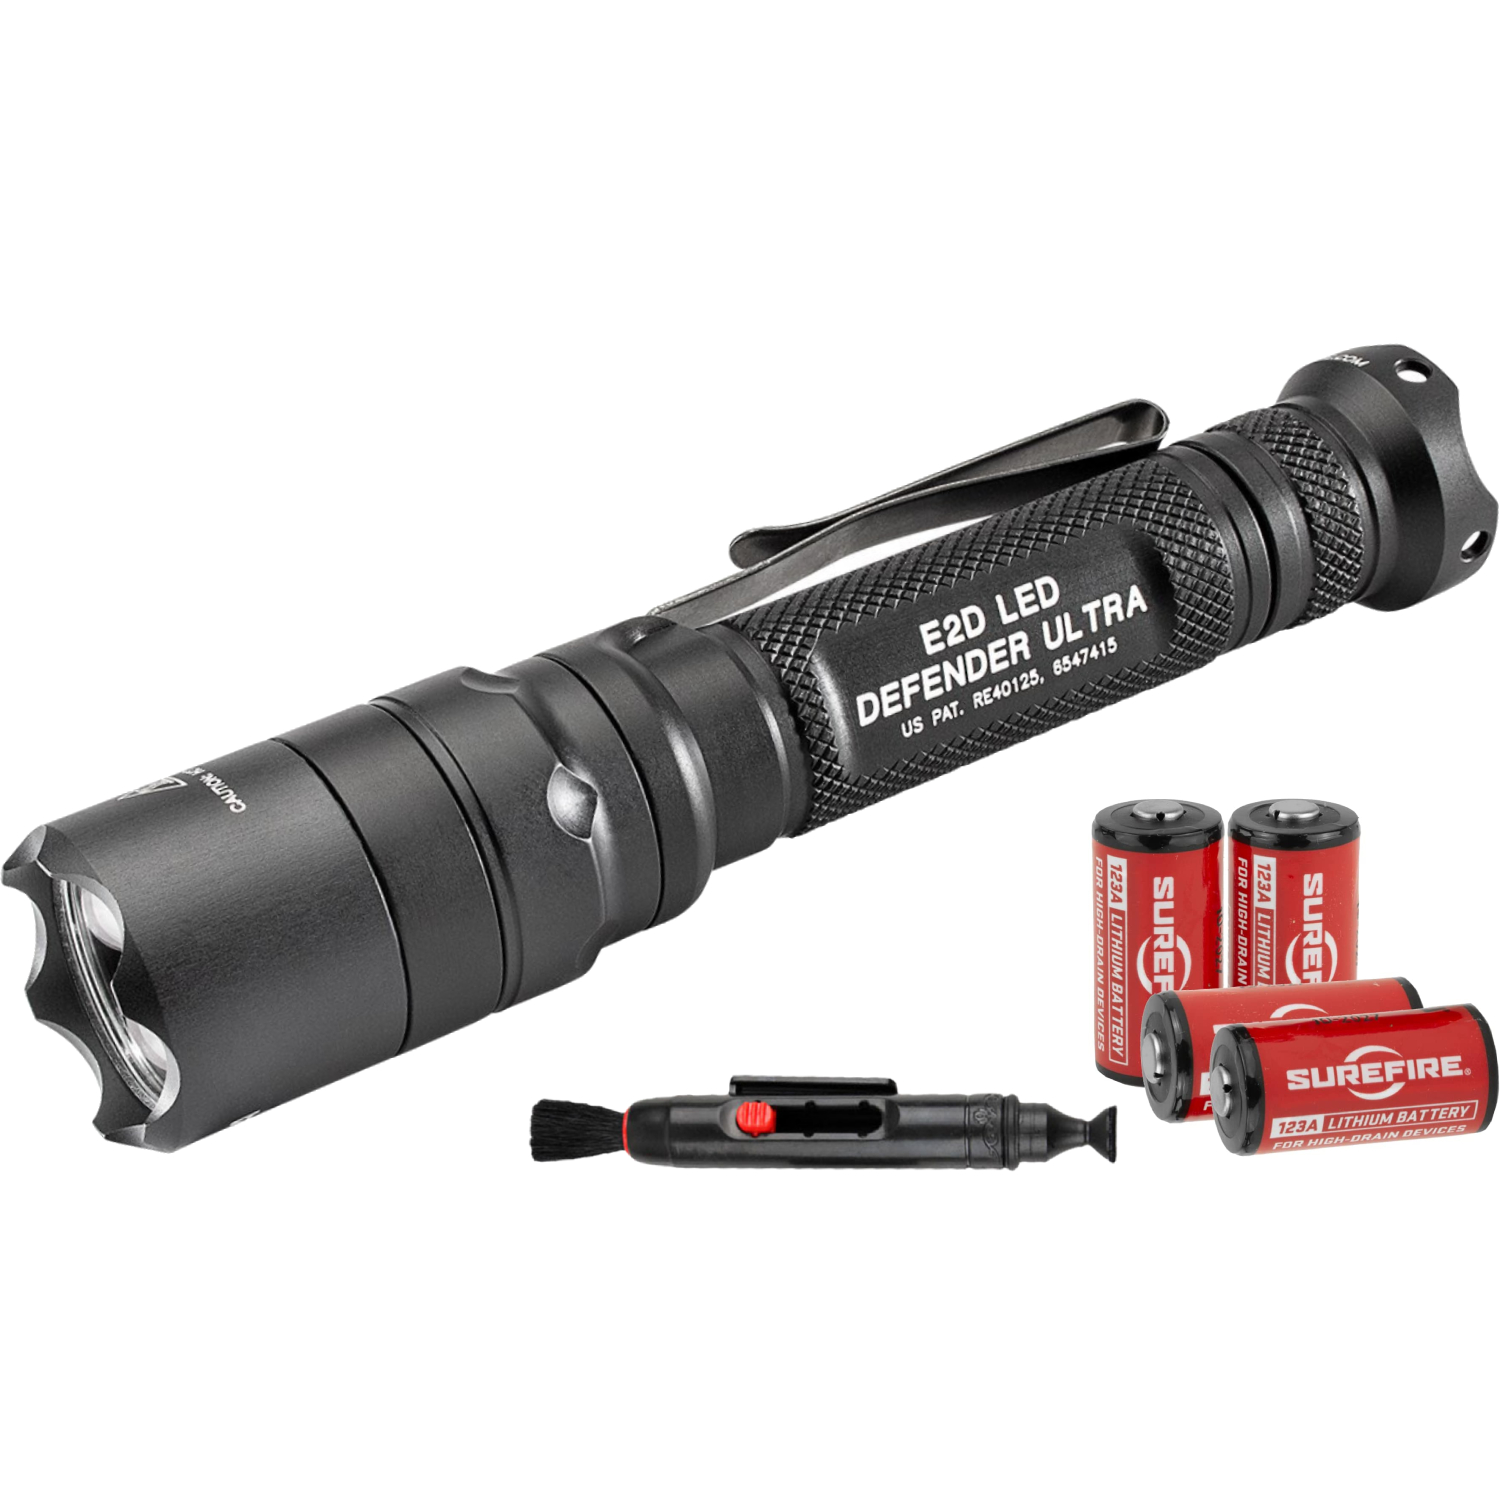 SureFire E2D Defender Tactical Dual Output LED Flashlight 1,000 Lumen  Additional SureFire Batteries and Lens Cleaning Kit